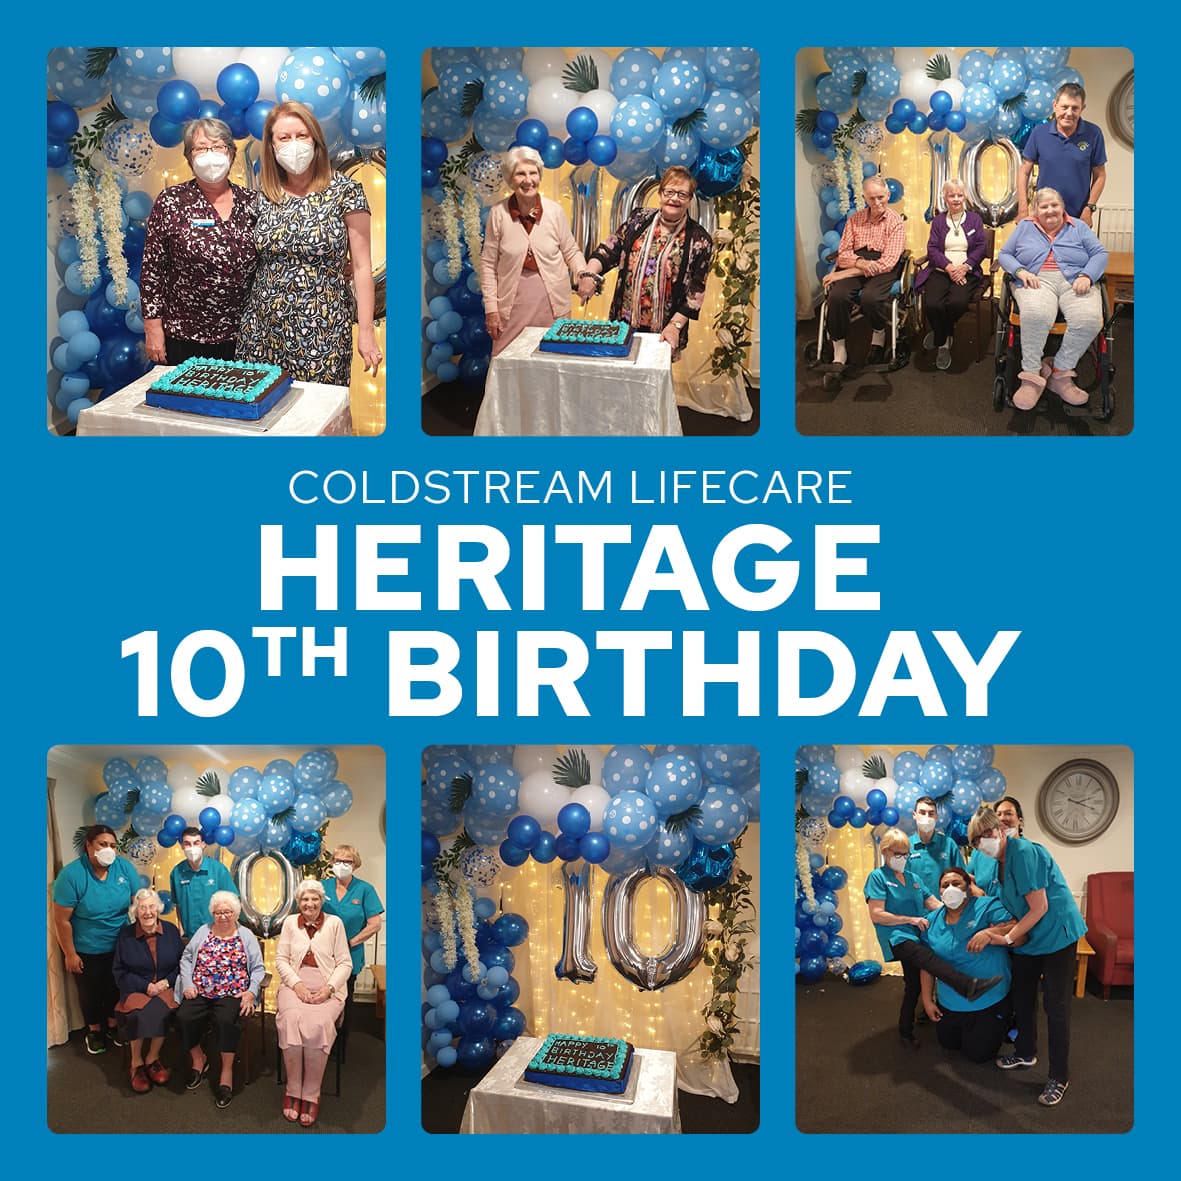 Coldstream Lifecare & Village celebrate Heritage's 10th birthday